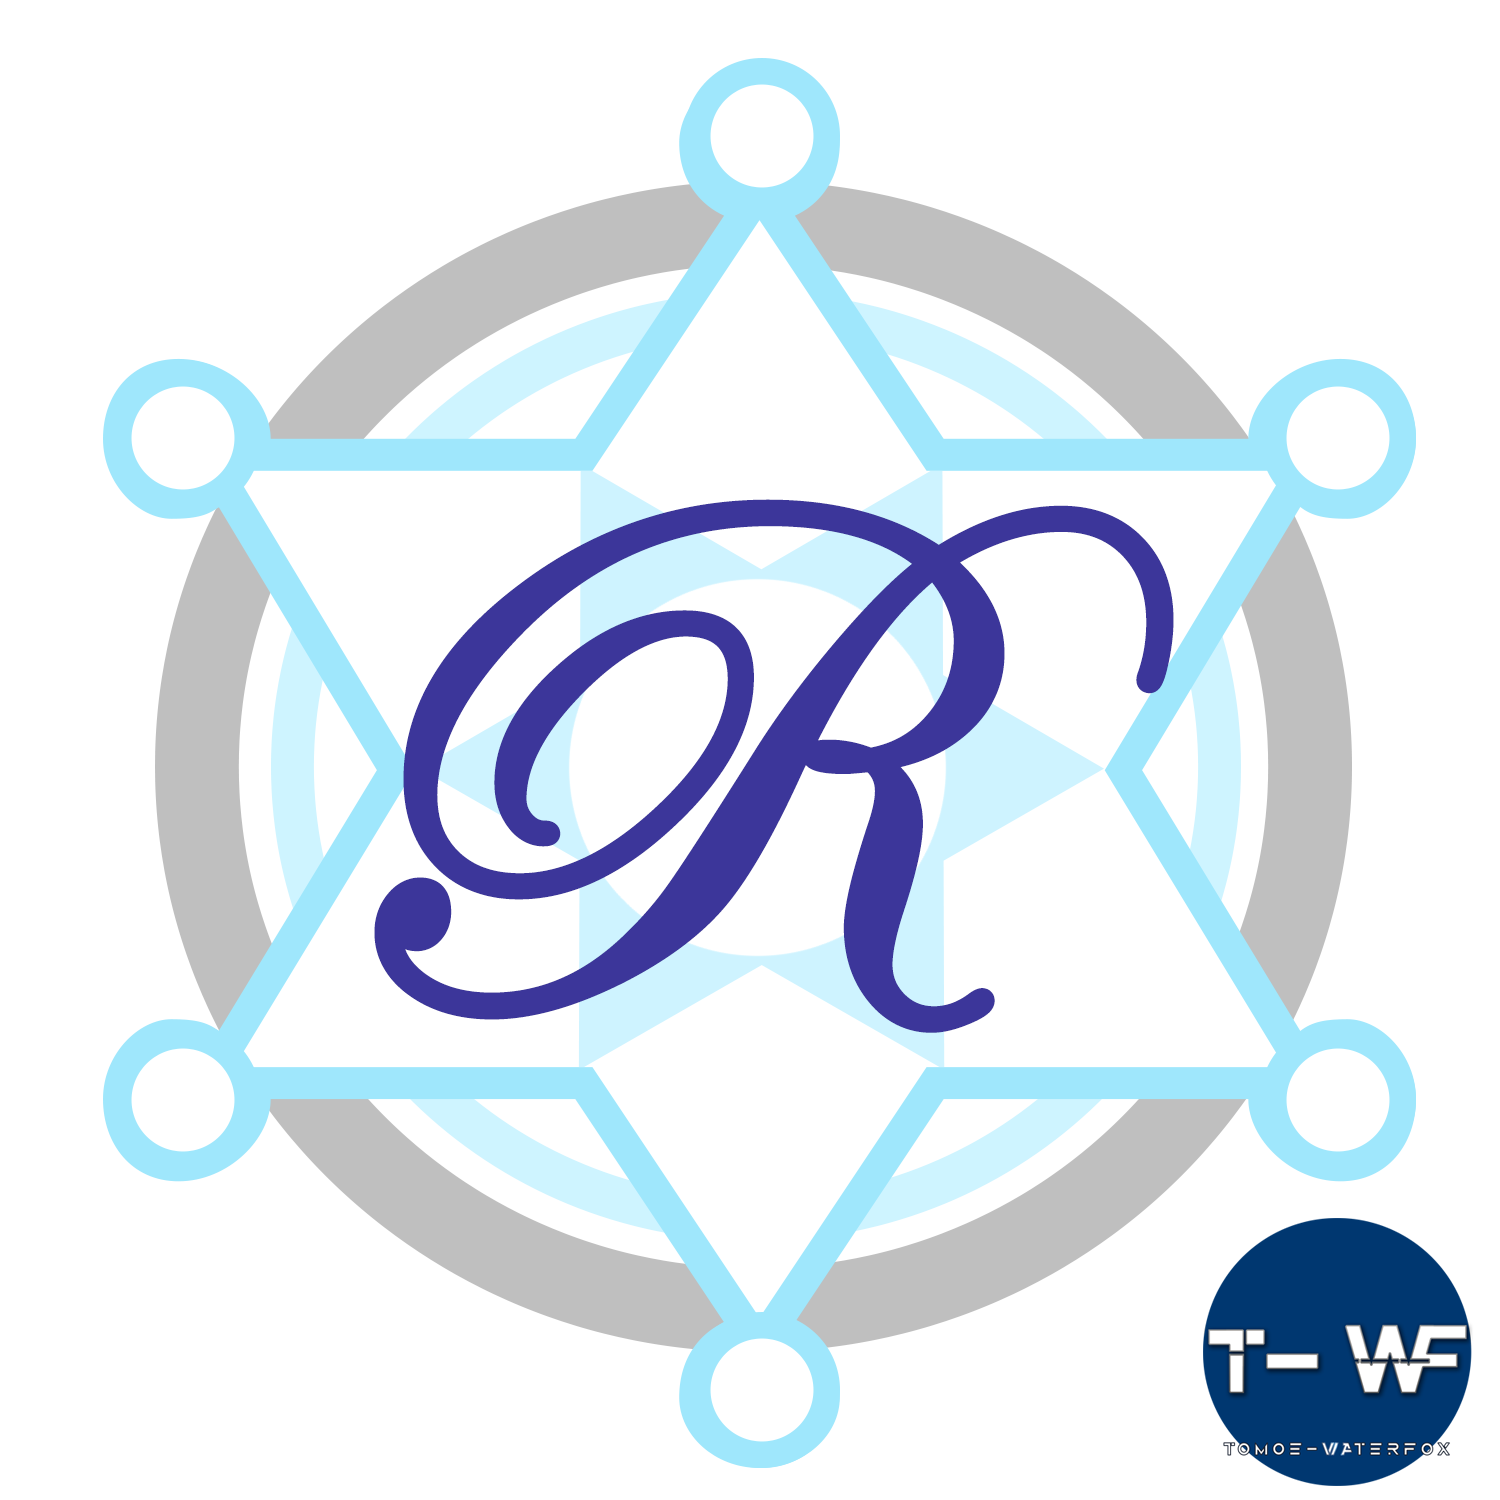 Lowee Rom & Ram logo render by T-WF